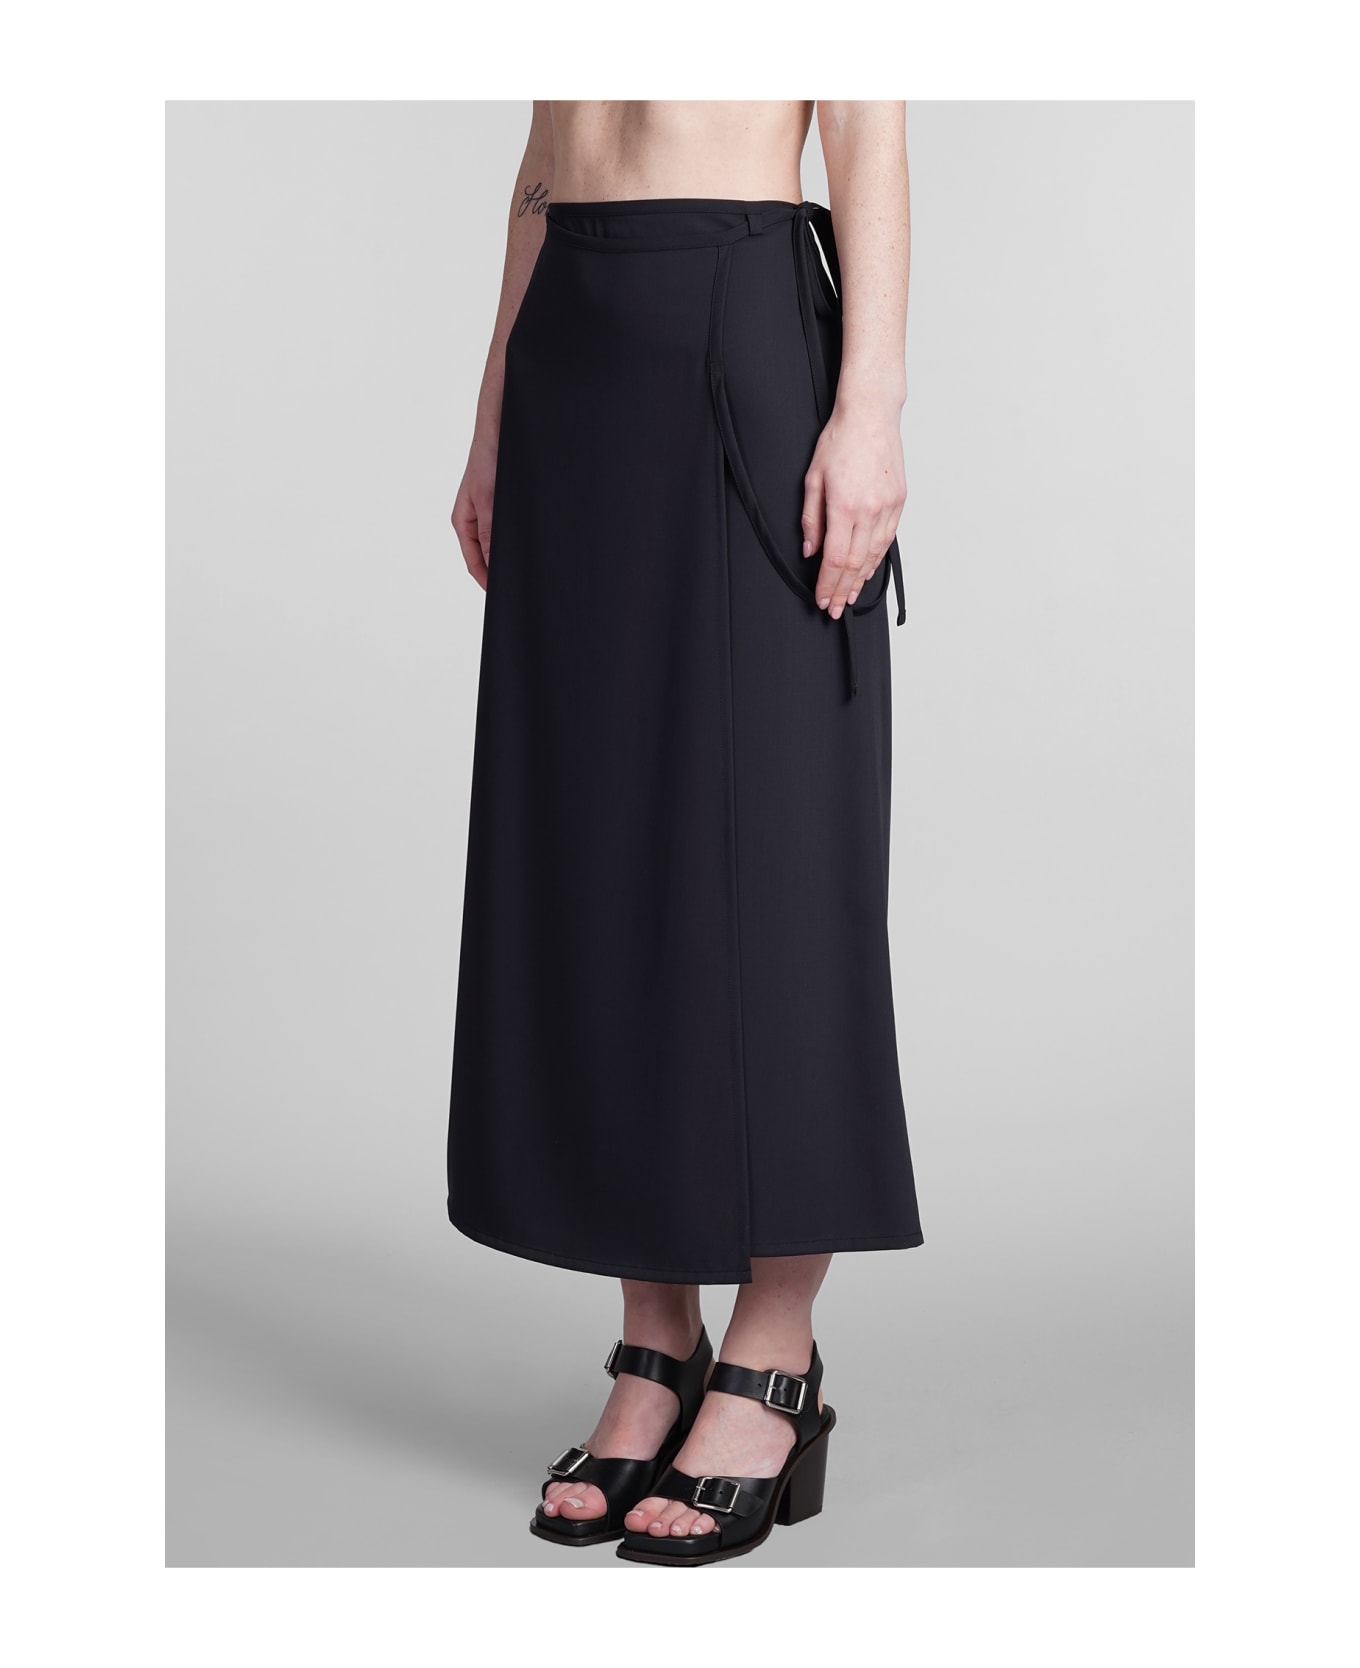 Lemaire Skirt In Black Wool - black